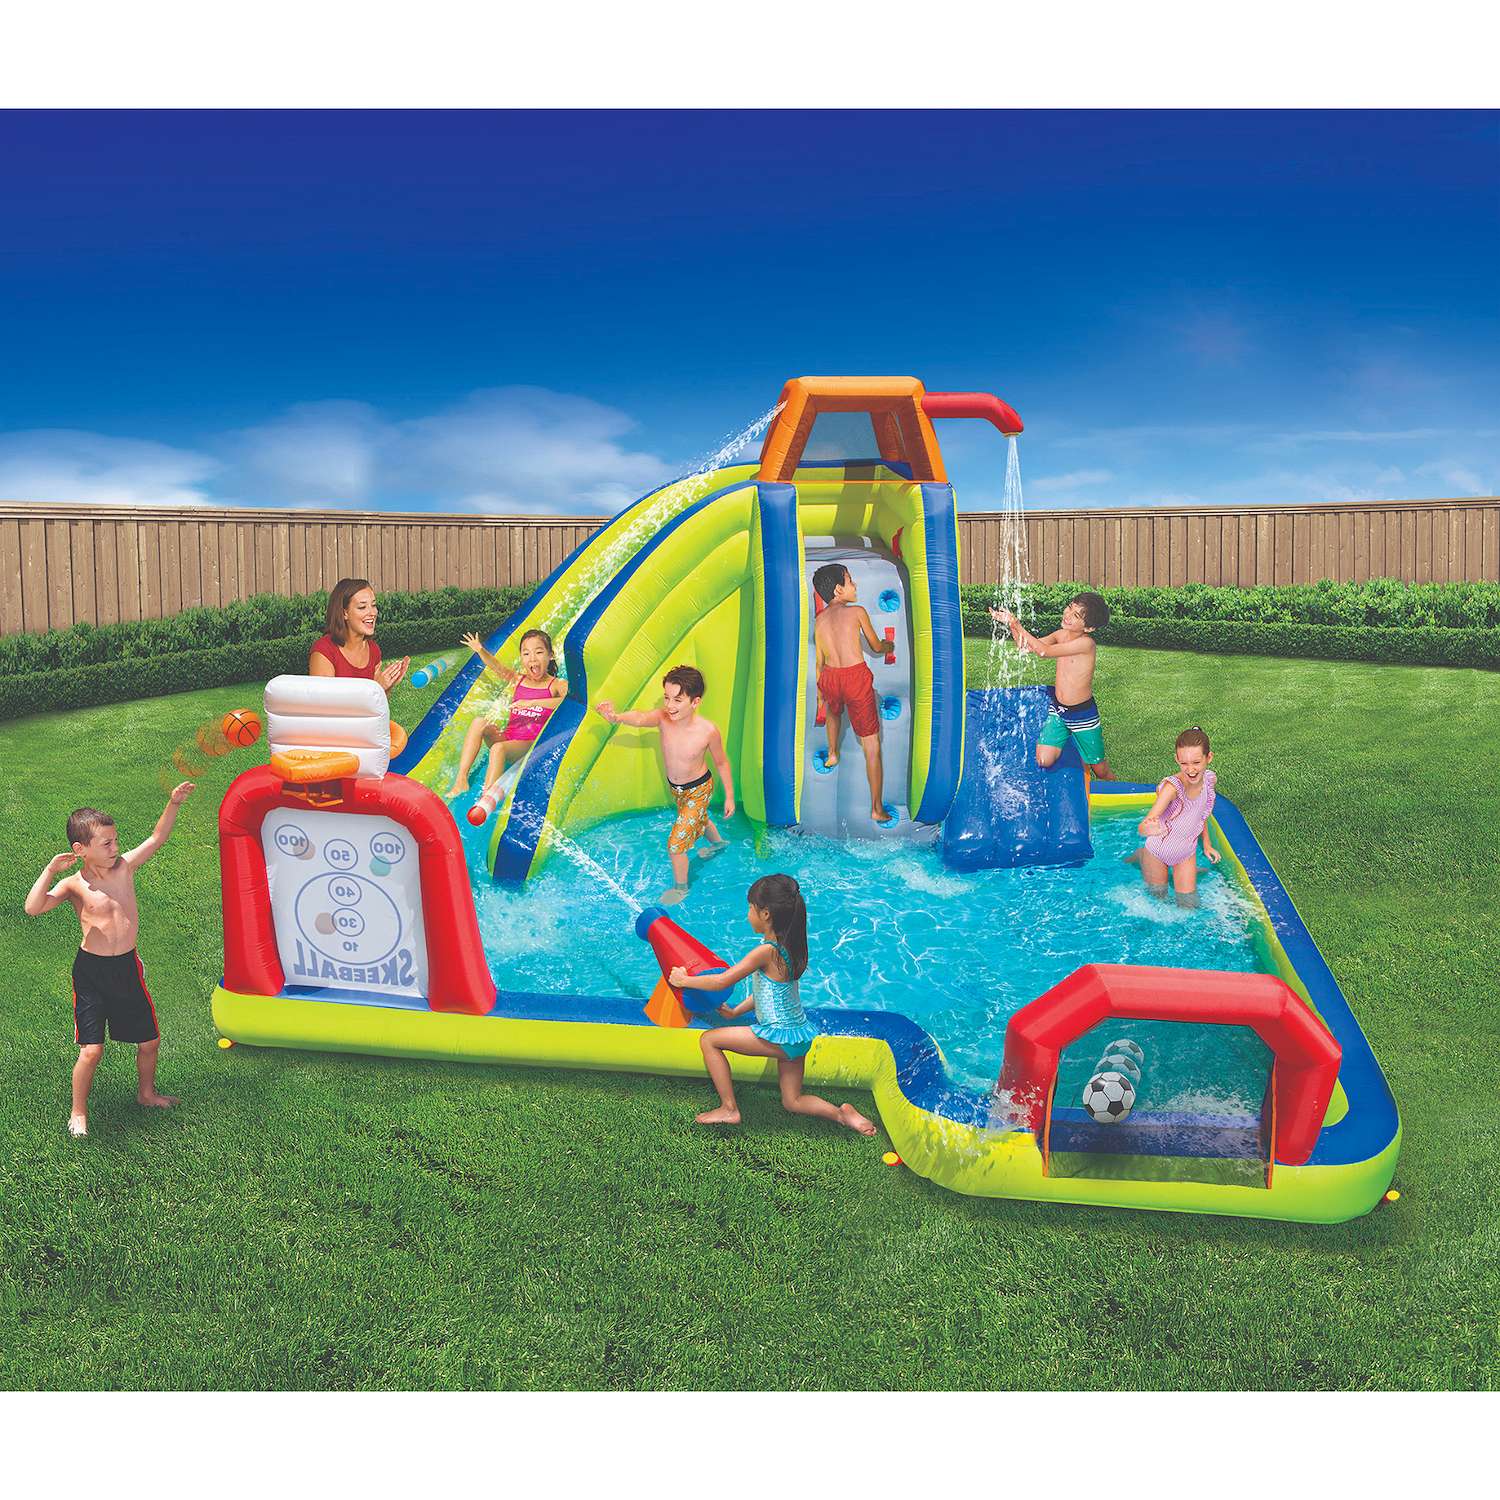 95" Banzai Inflatable Arcade Game Splash Water Park w/ Slide & Blower $260 + Free Shipping